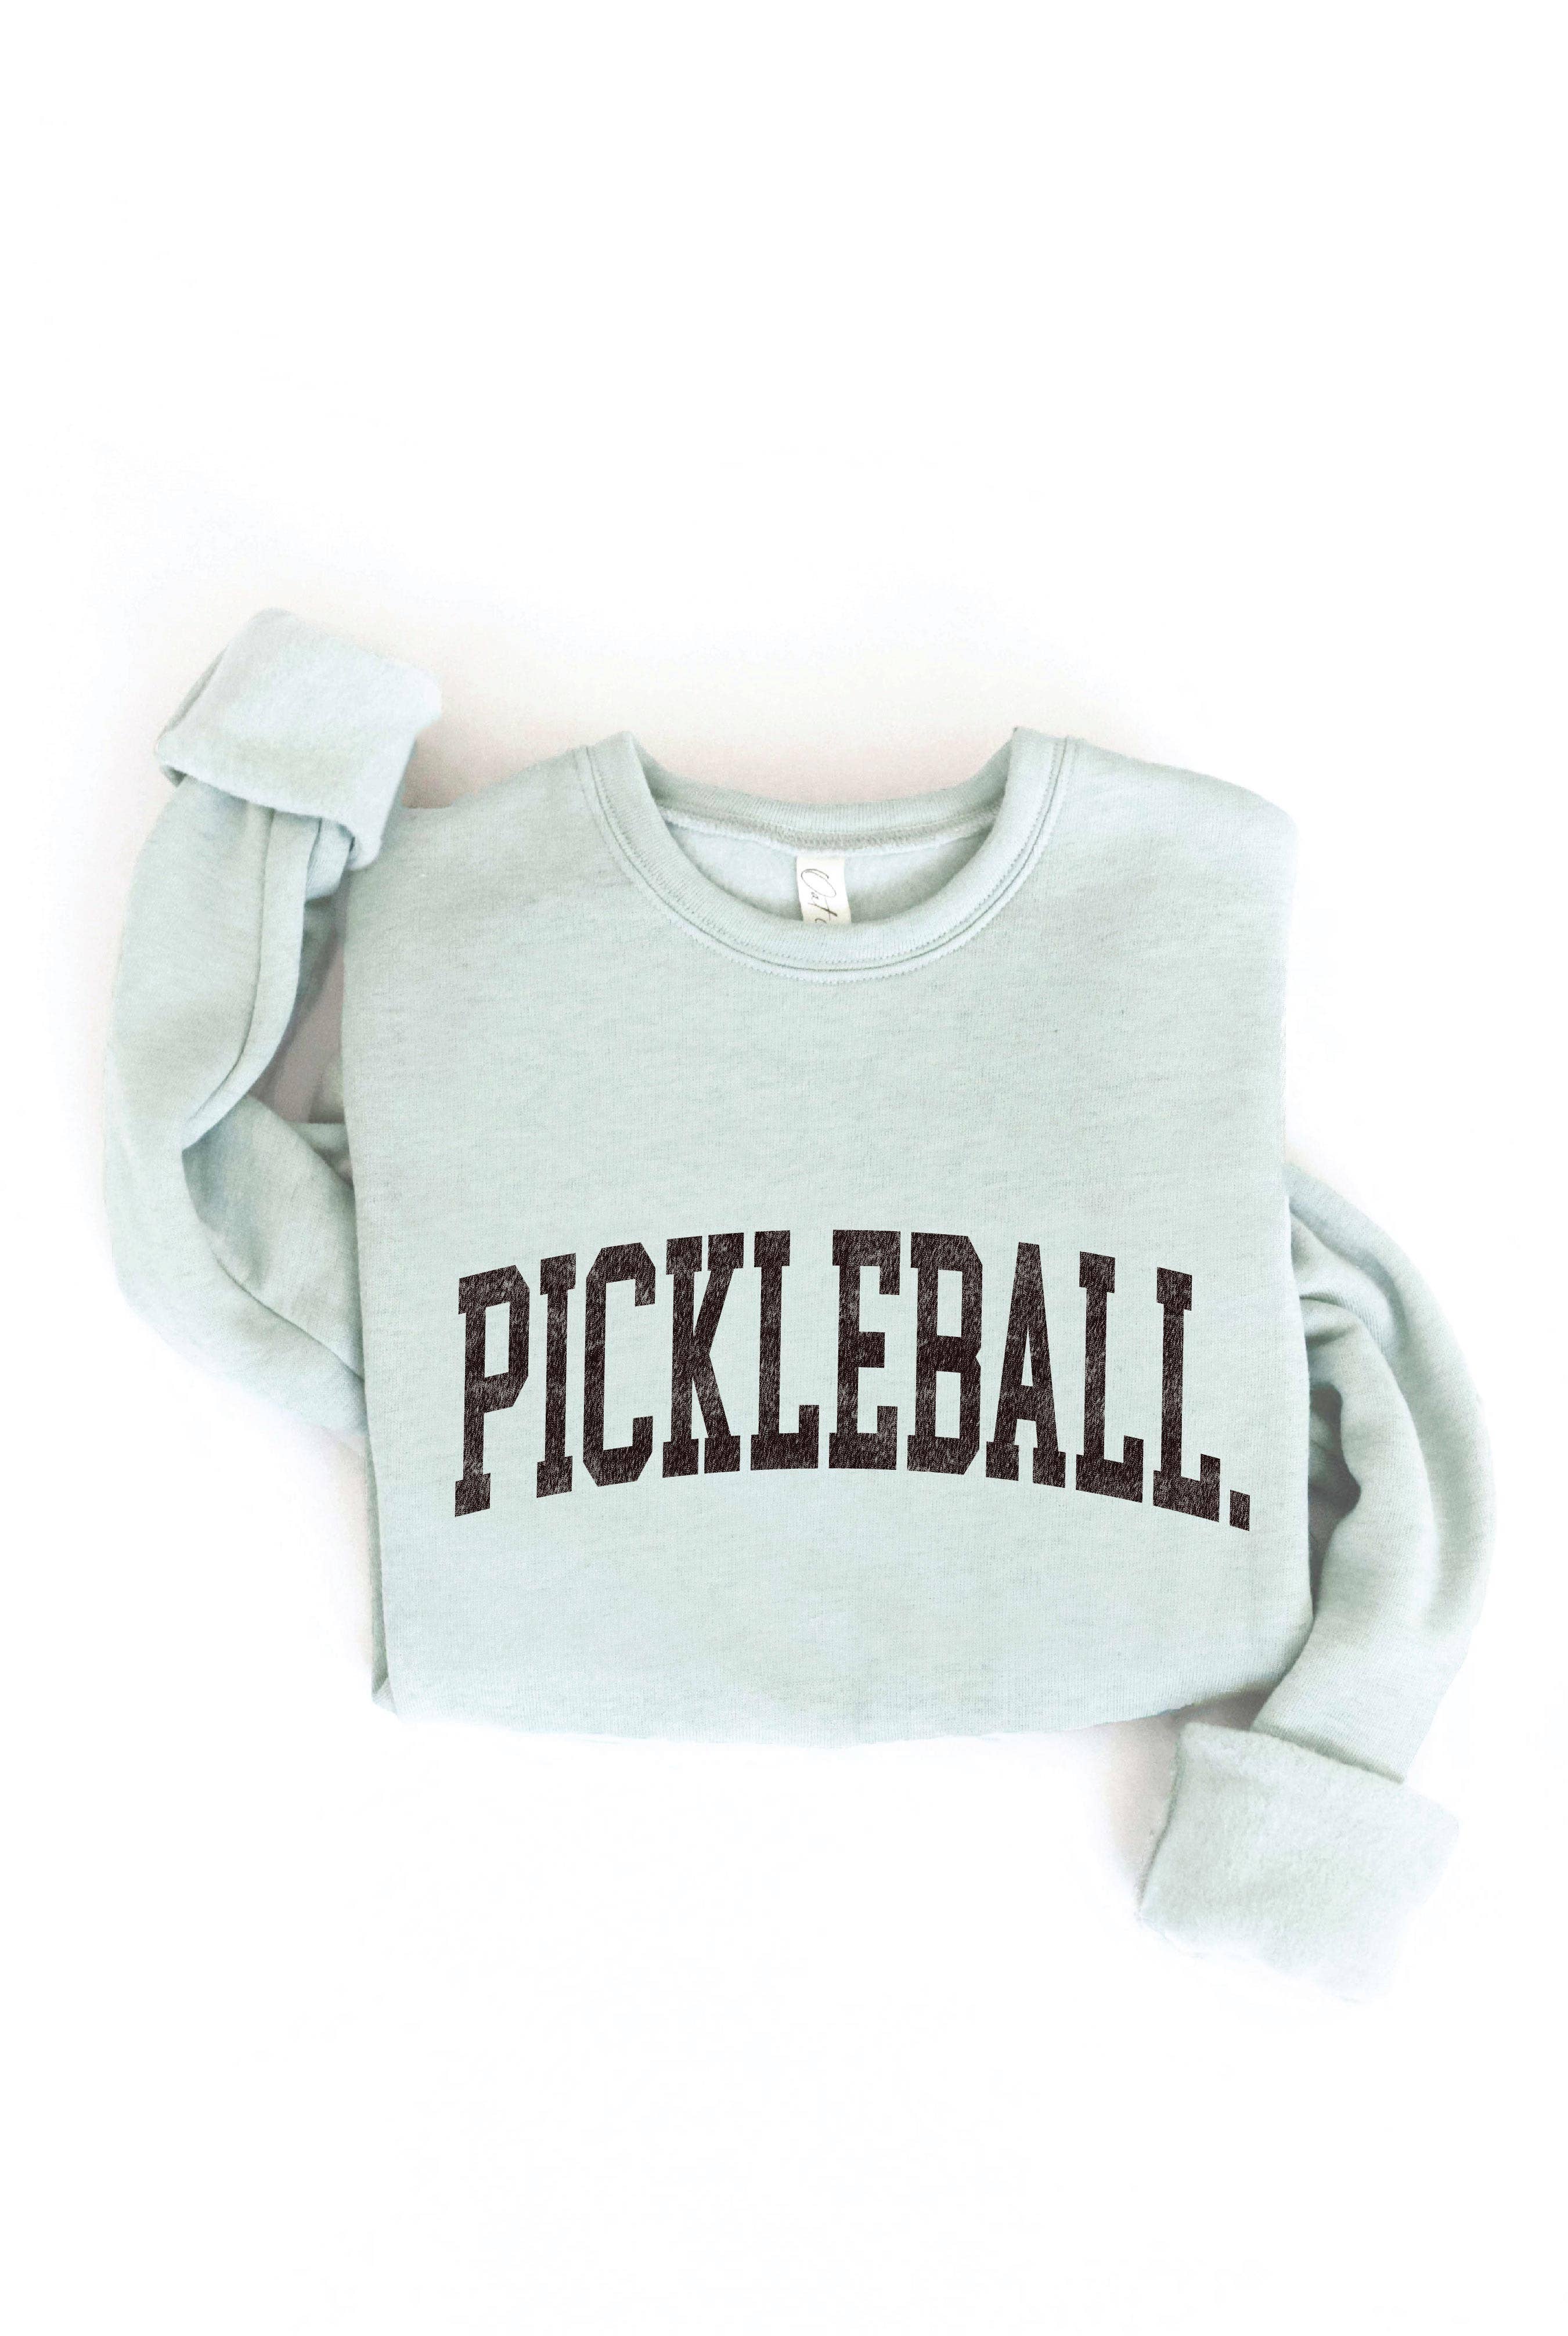 PICKLEBALL Graphic Sweatshirt: XL / ROSE